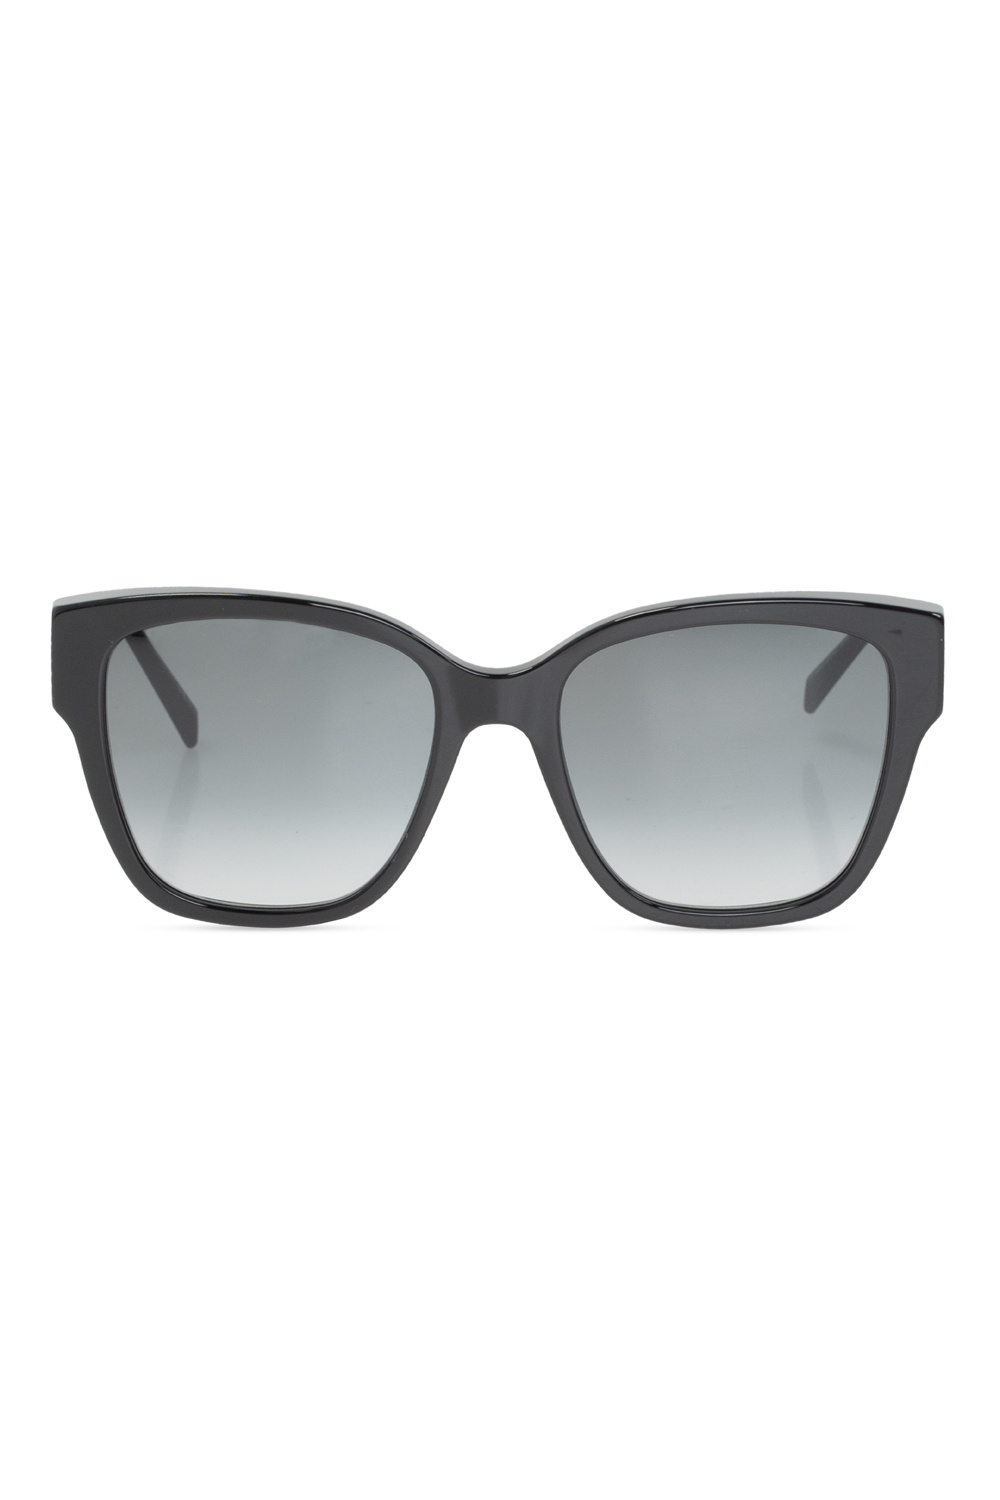 Givenchy Bottega Veneta Eyewear angular square-frame sunglasses